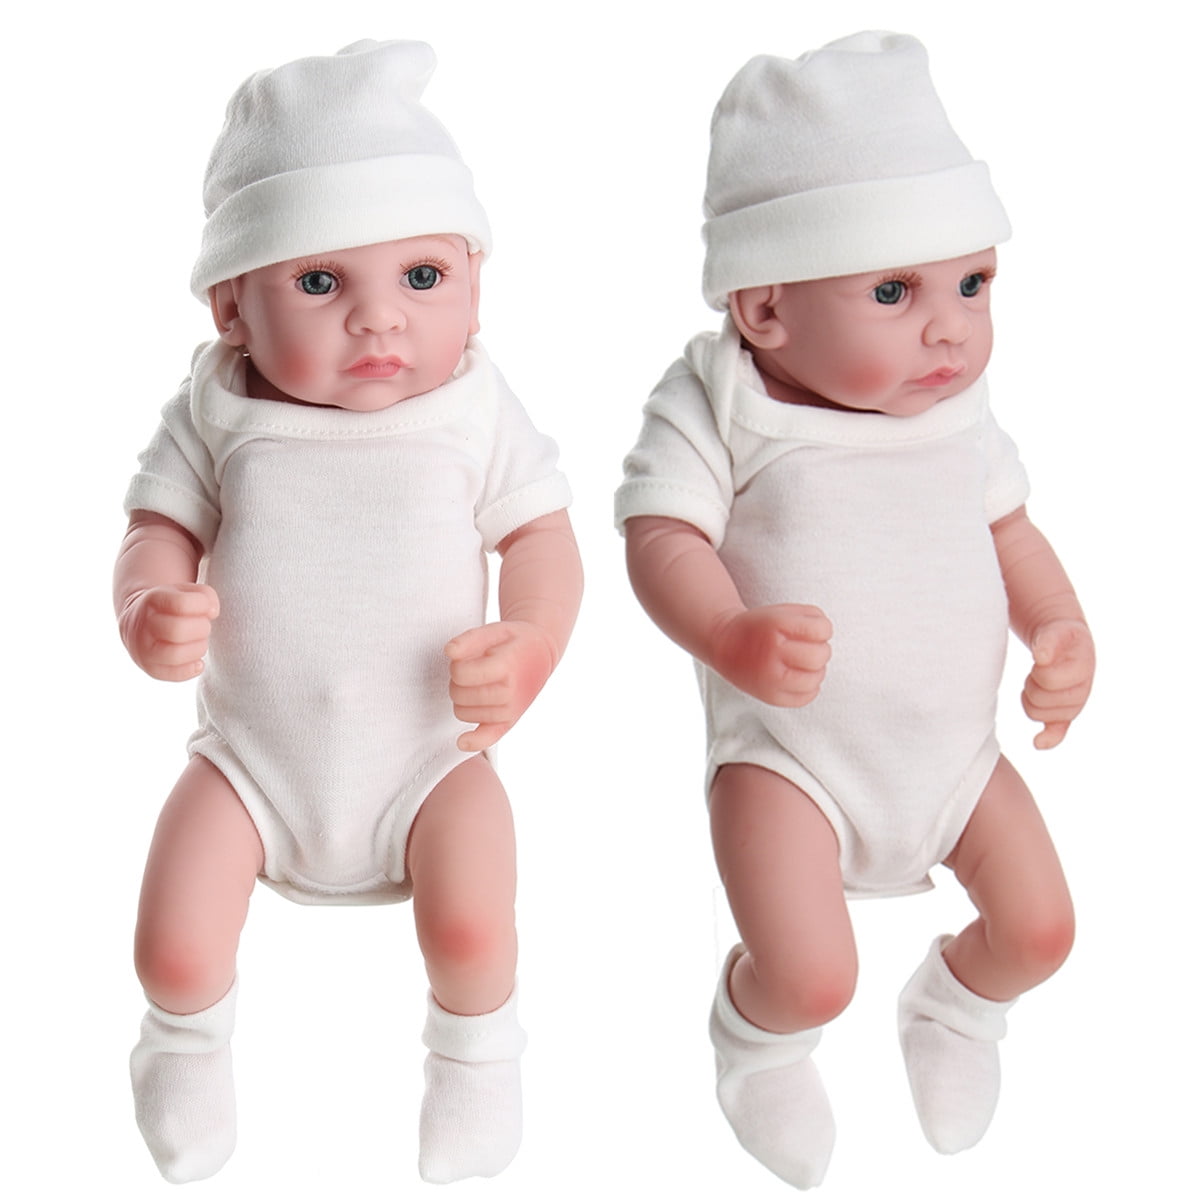 11"-Handmade-Reborn-Real-Looking-Newborn-Baby-Boy-Vinyl-Silicone-Realistic-Doll 